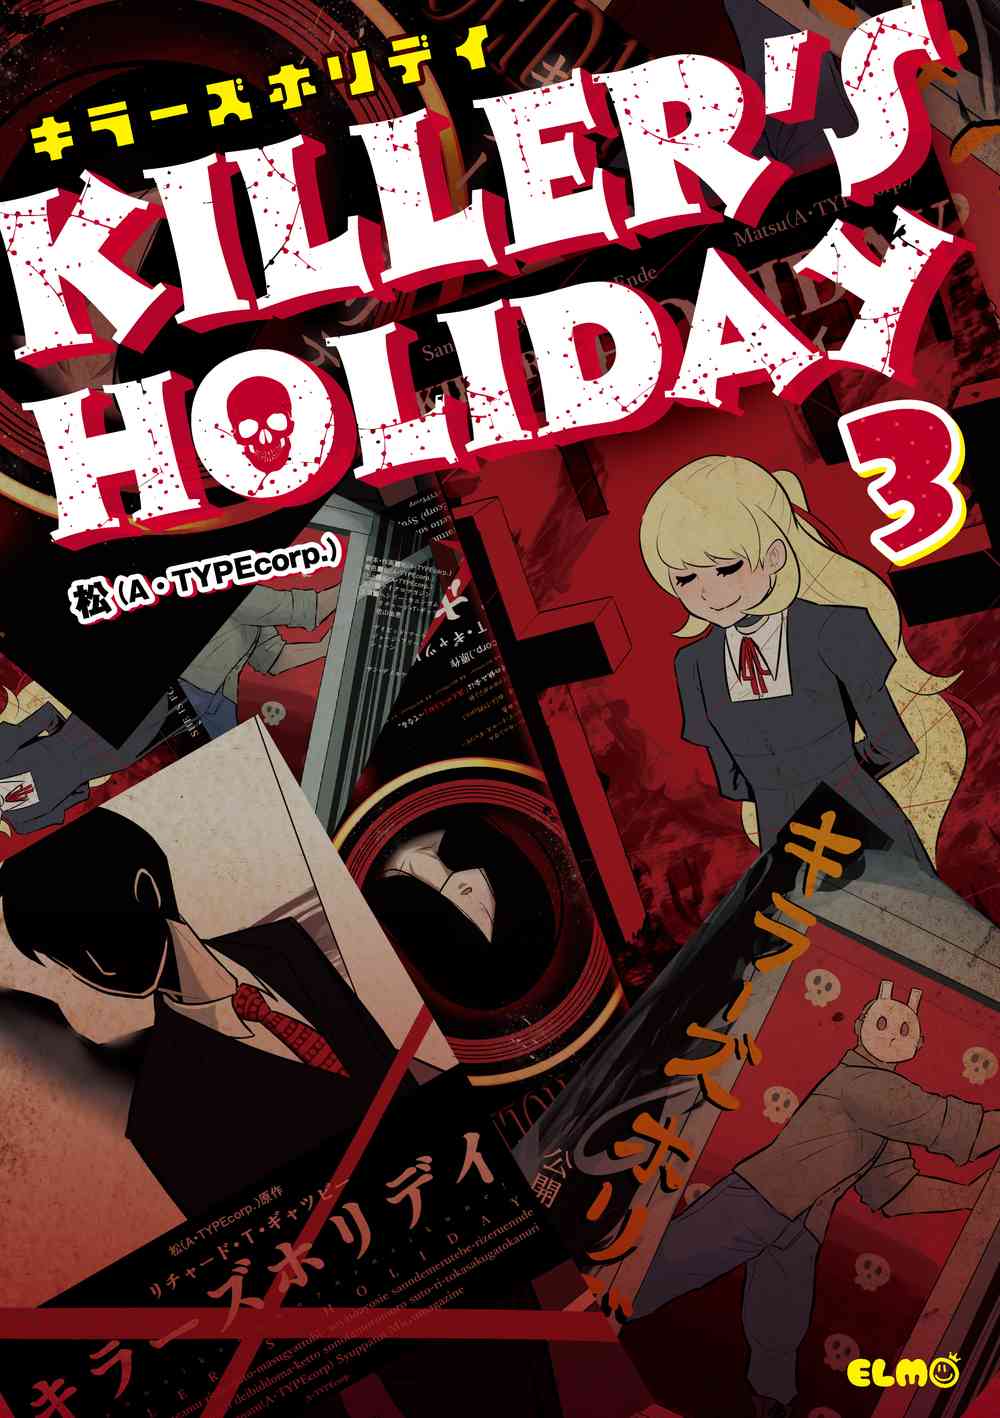 KILLER’S HOLIDAY 3